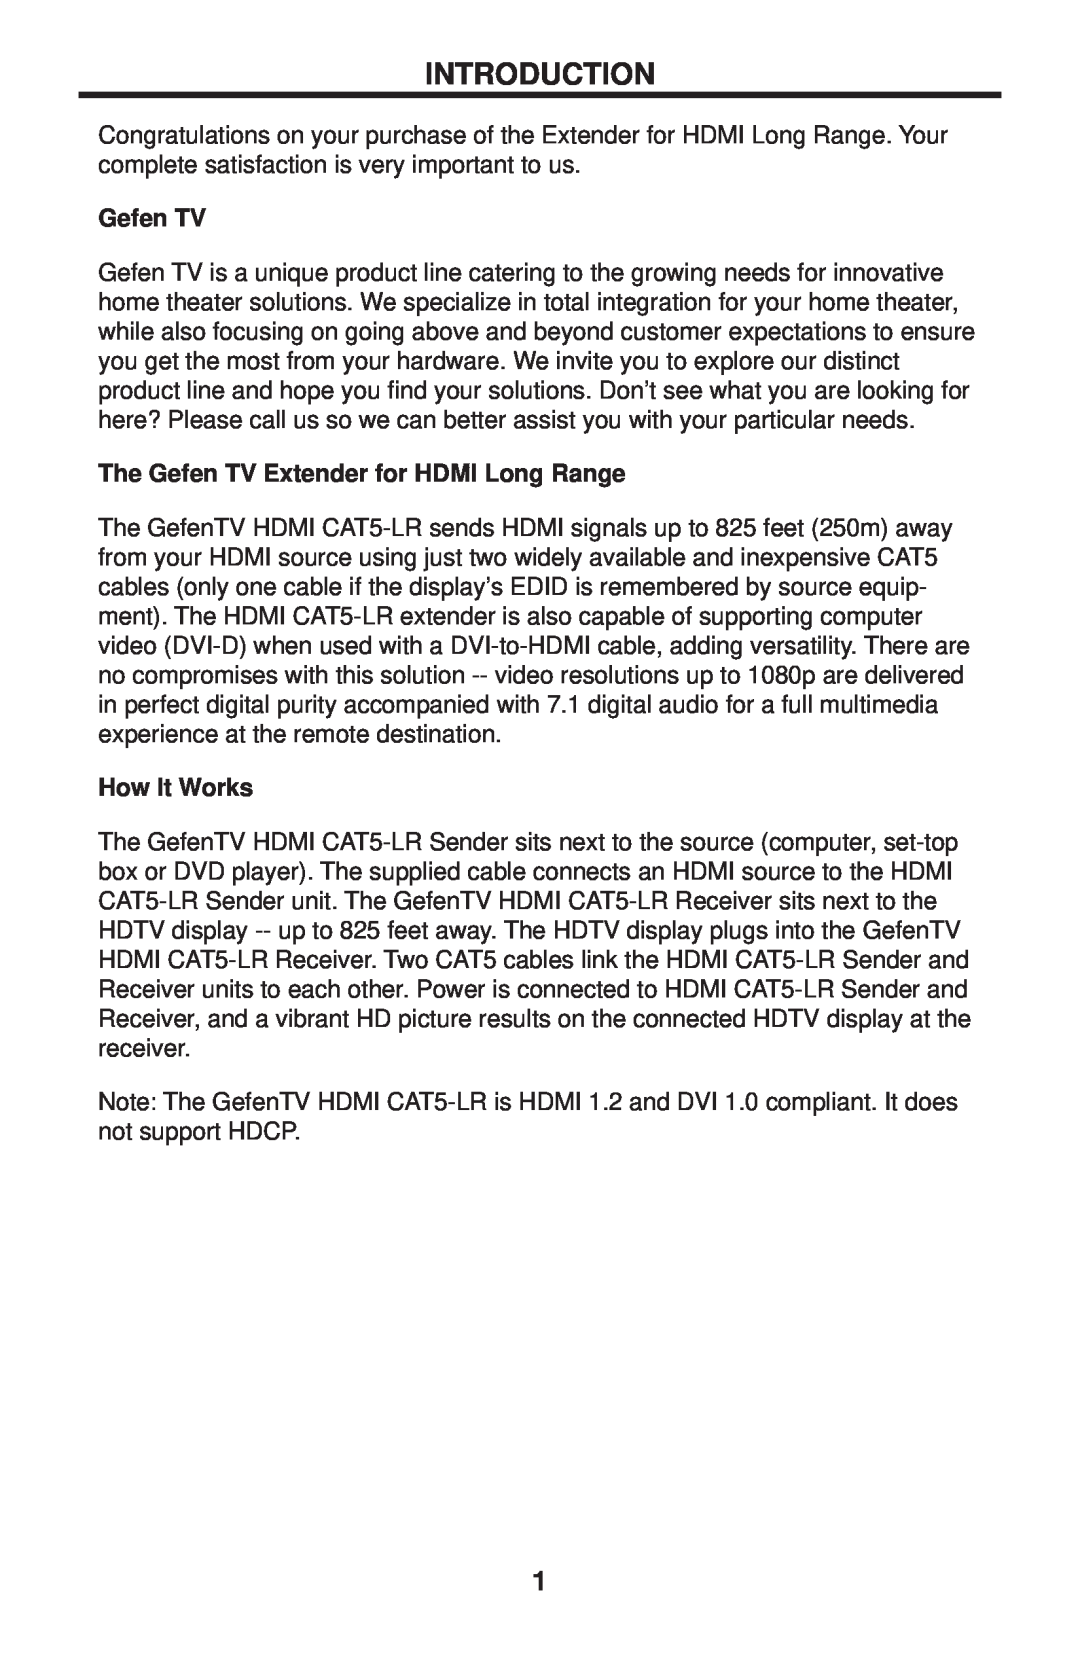 Gefen GTV-HDMI-CAT5LR user manual Introduction, The Gefen TV Extender for HDMI Long Range, How It Works 